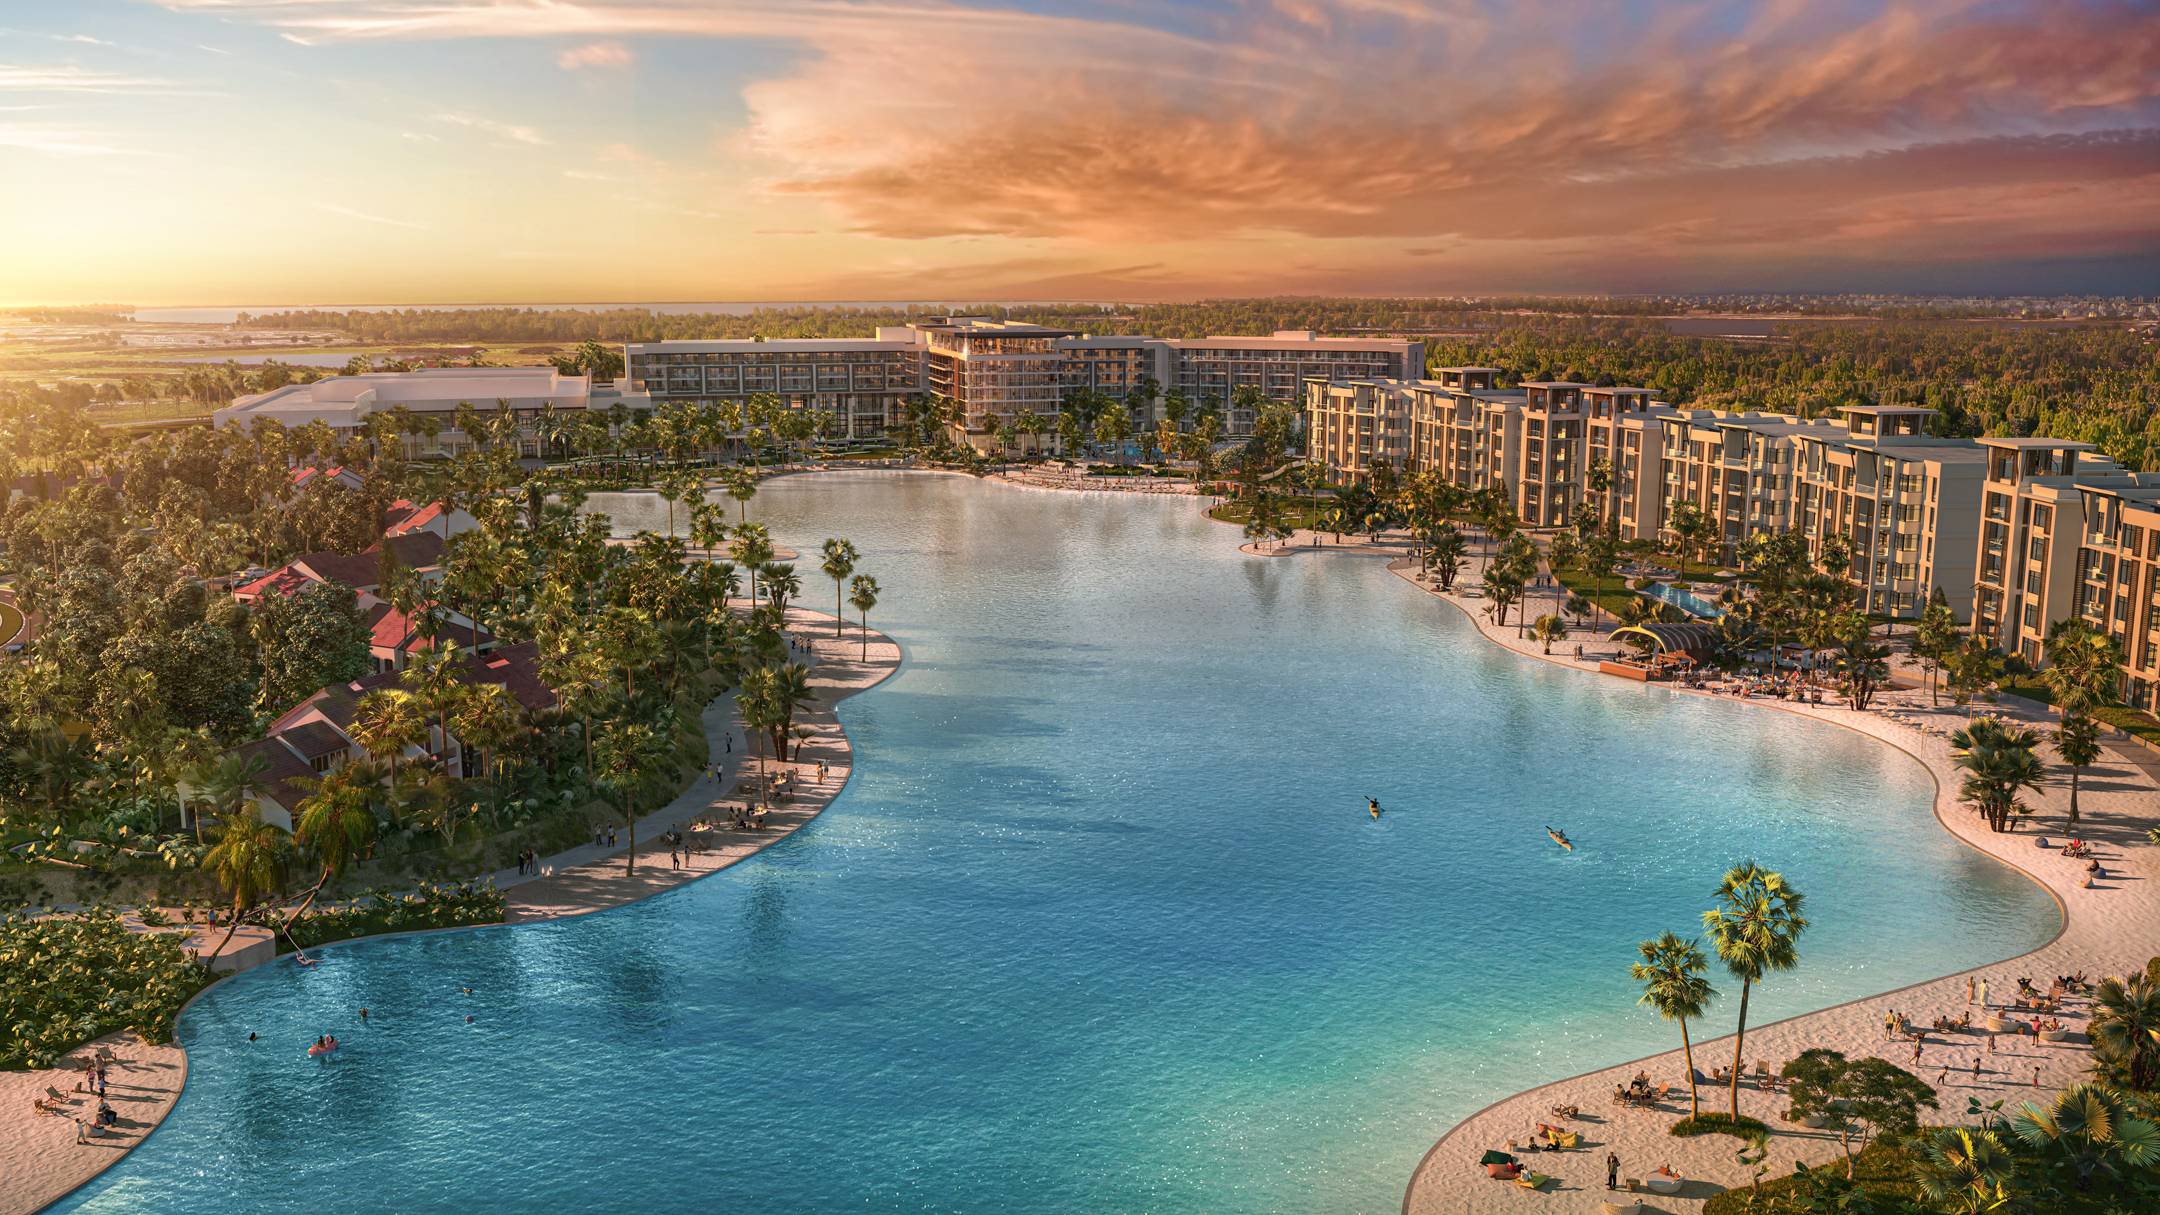 Evermore Orlando Resort - A new billion-dollar, 10,000-room resort project is coming right next to Walt Disney World